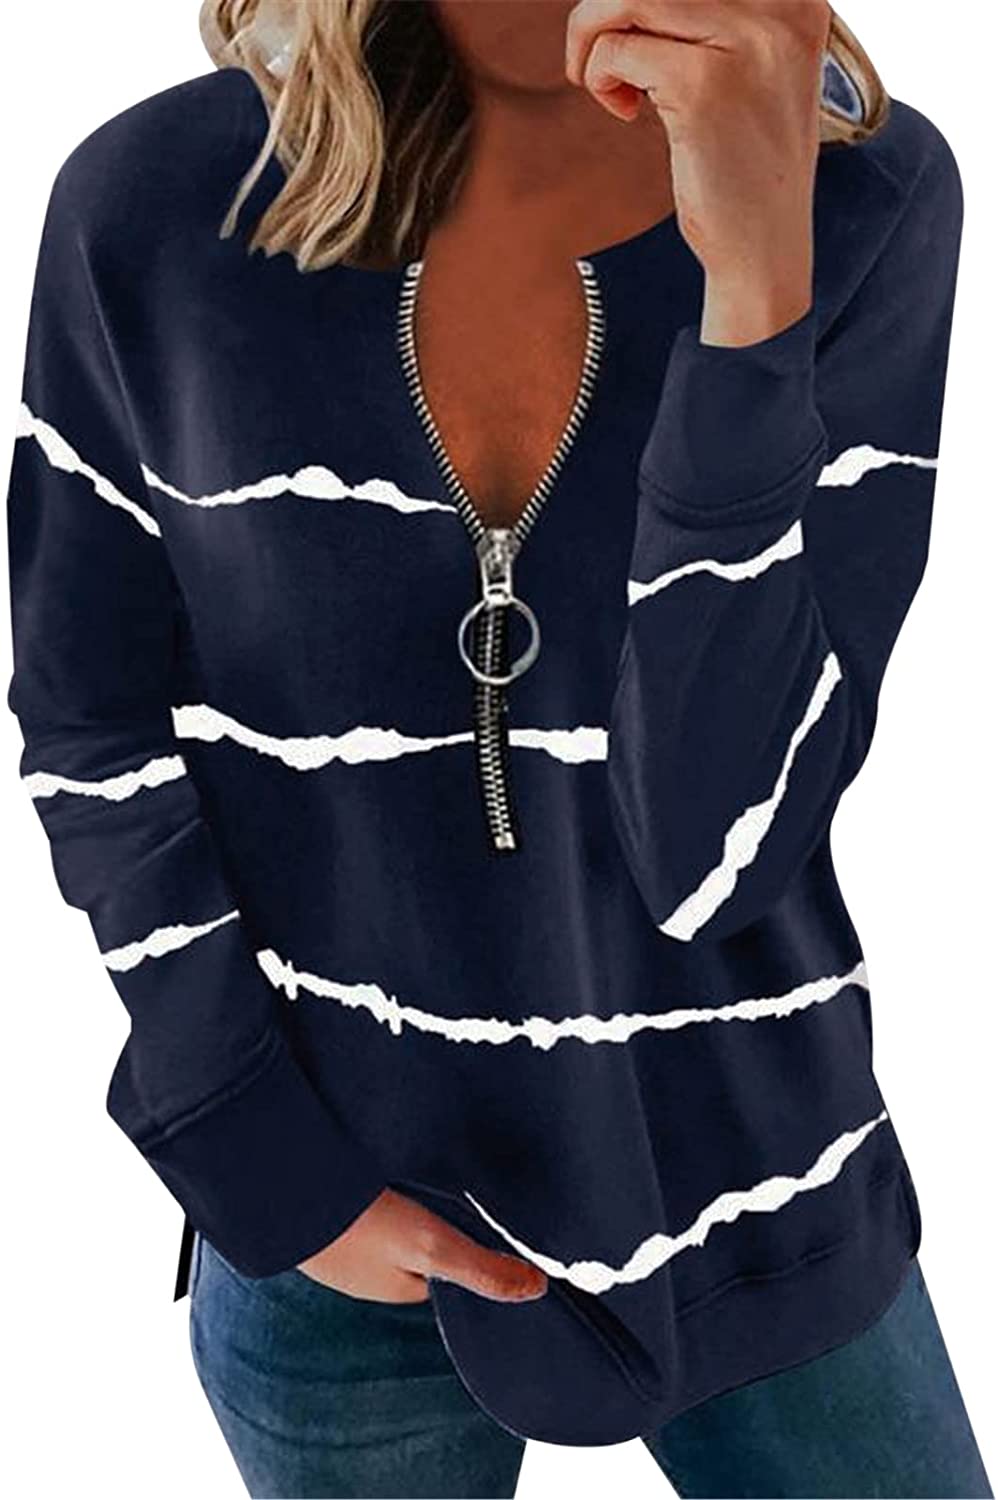 POPNINGKS Womens Long Sleeve Sweatshirt Fashion Planet Printed Hoodie Ladies Causal Pullover Tops Blouse 